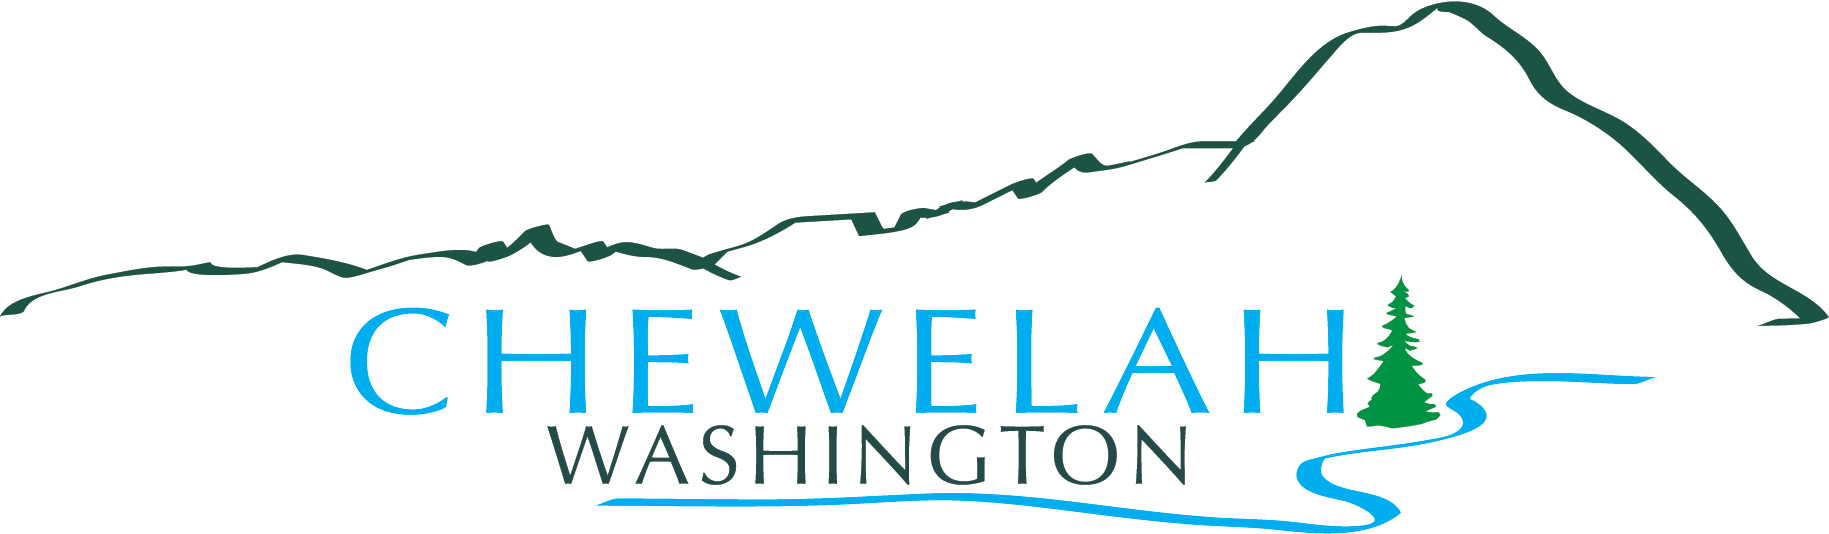 Chewelah Washington Home Page